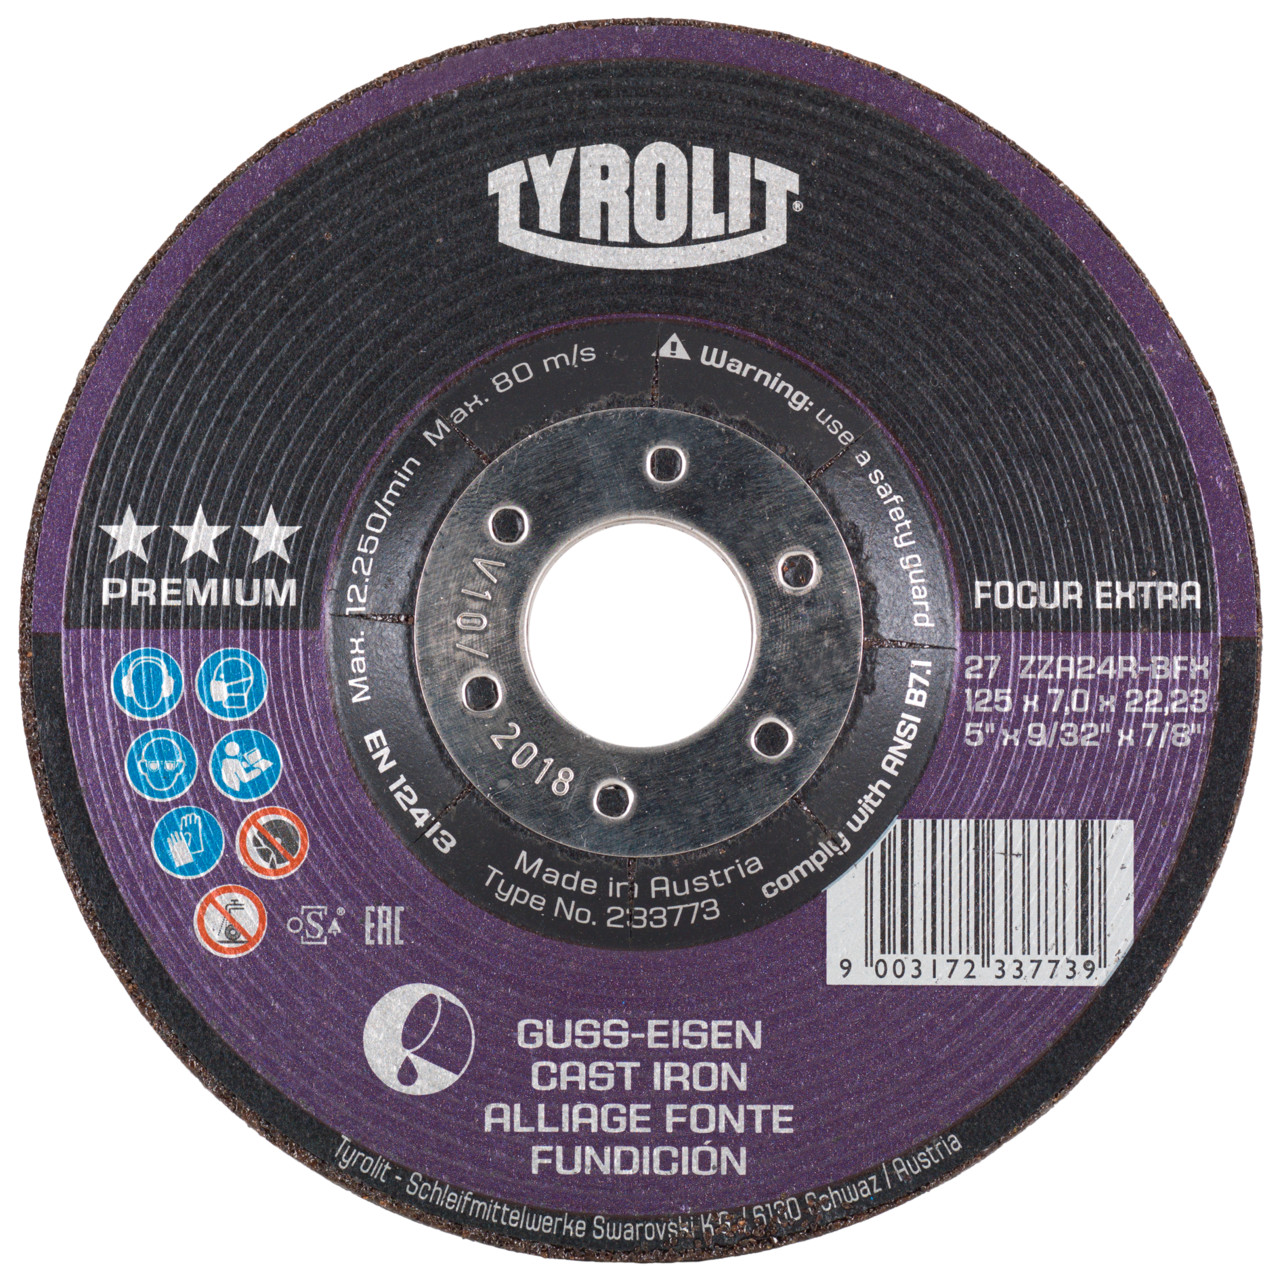 Tyrolit Roughing disc DxUxH 178x7x22.23 FOCUR Extra for cast iron, shape: 27 - offset version, Art. 929018